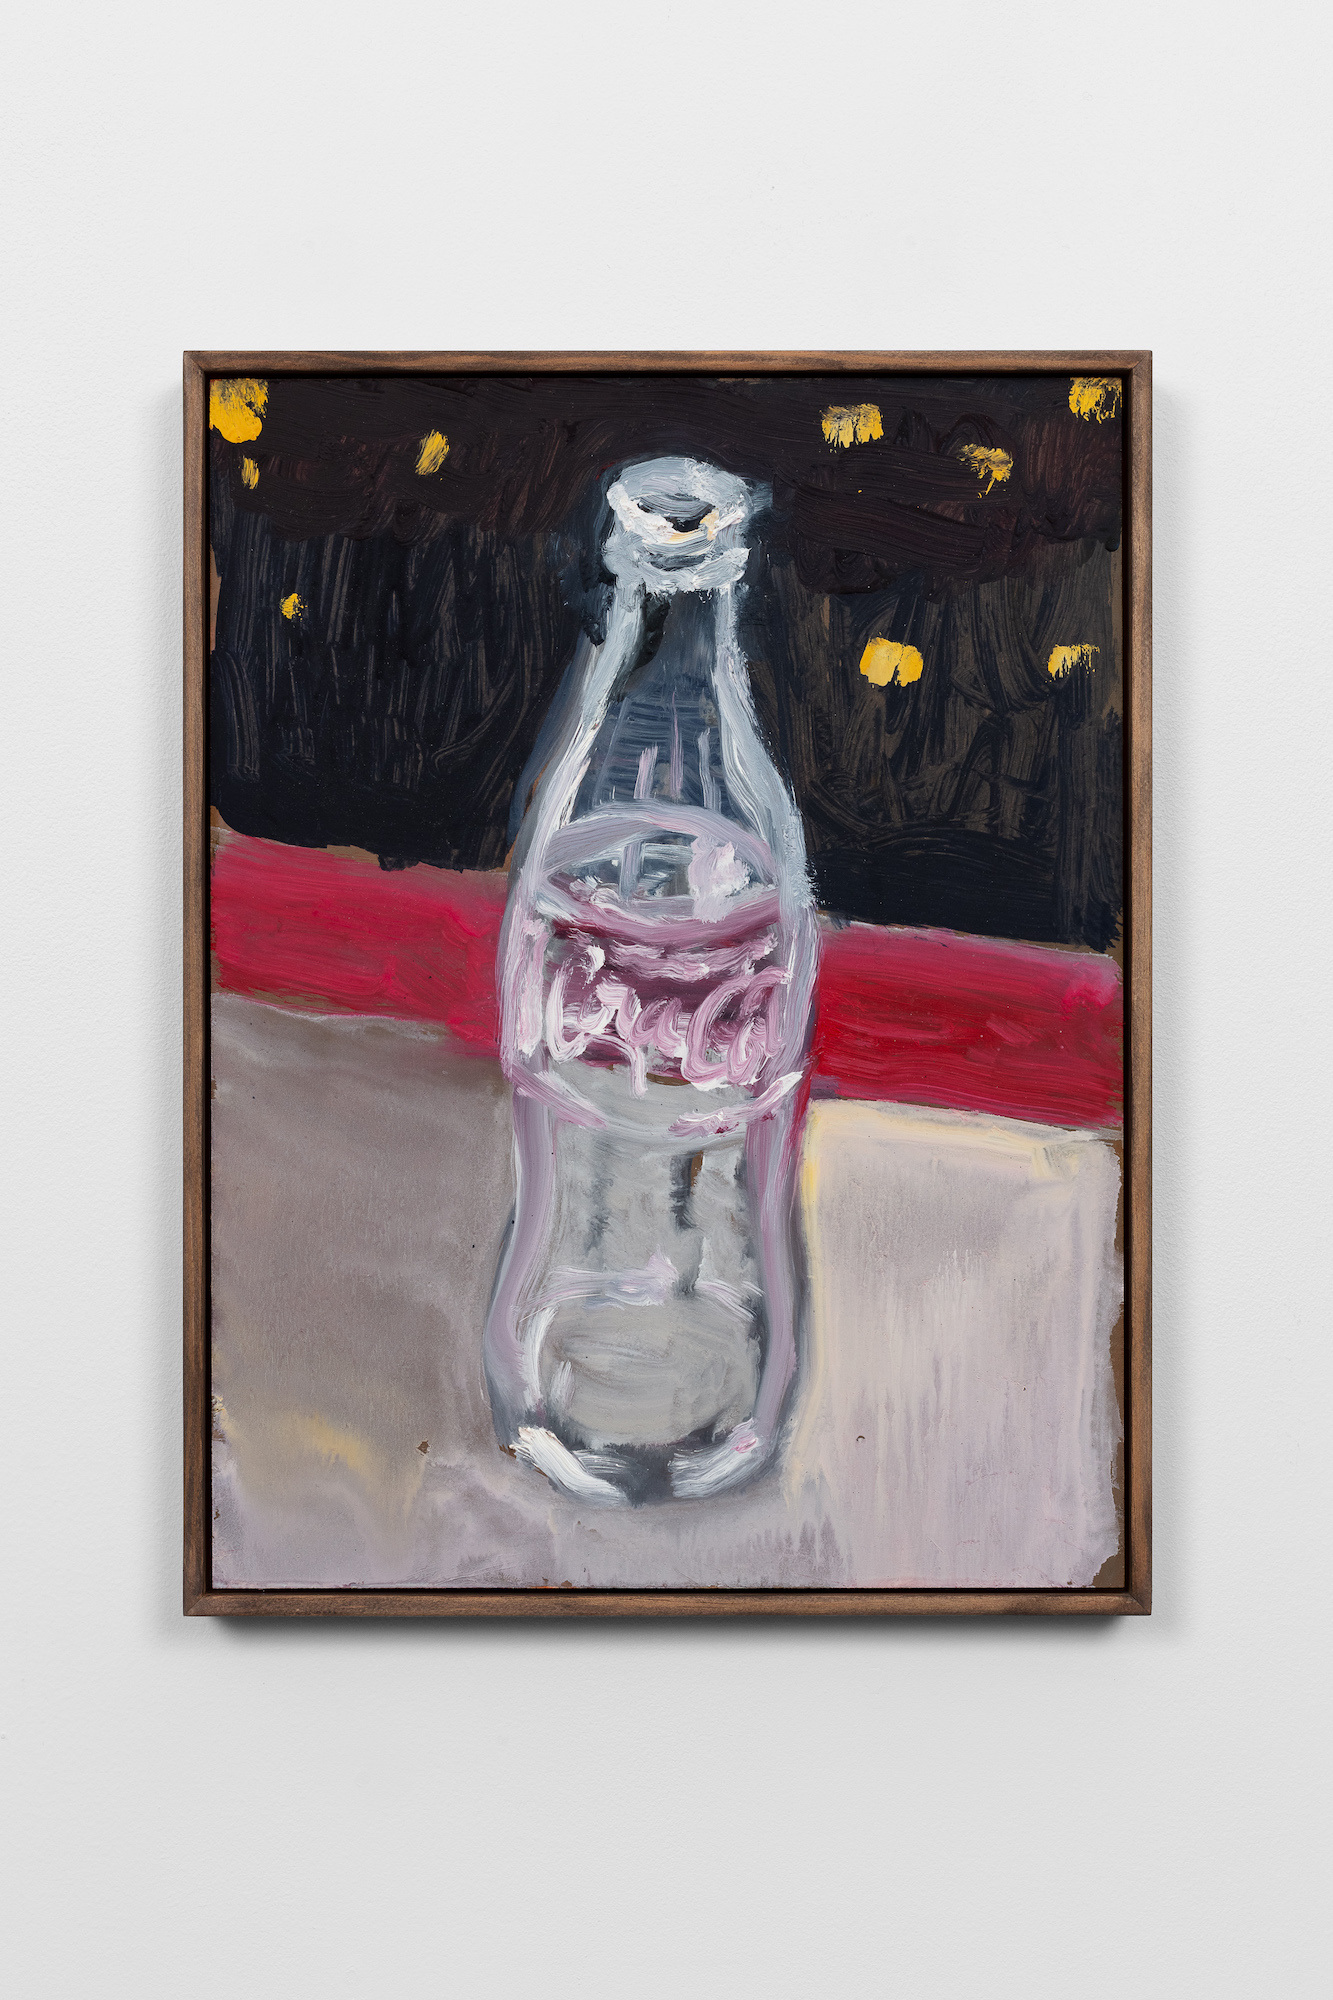 Christian Gravningen, Empty Cola, 2020, Oil on mdf, 40 x 30 cm